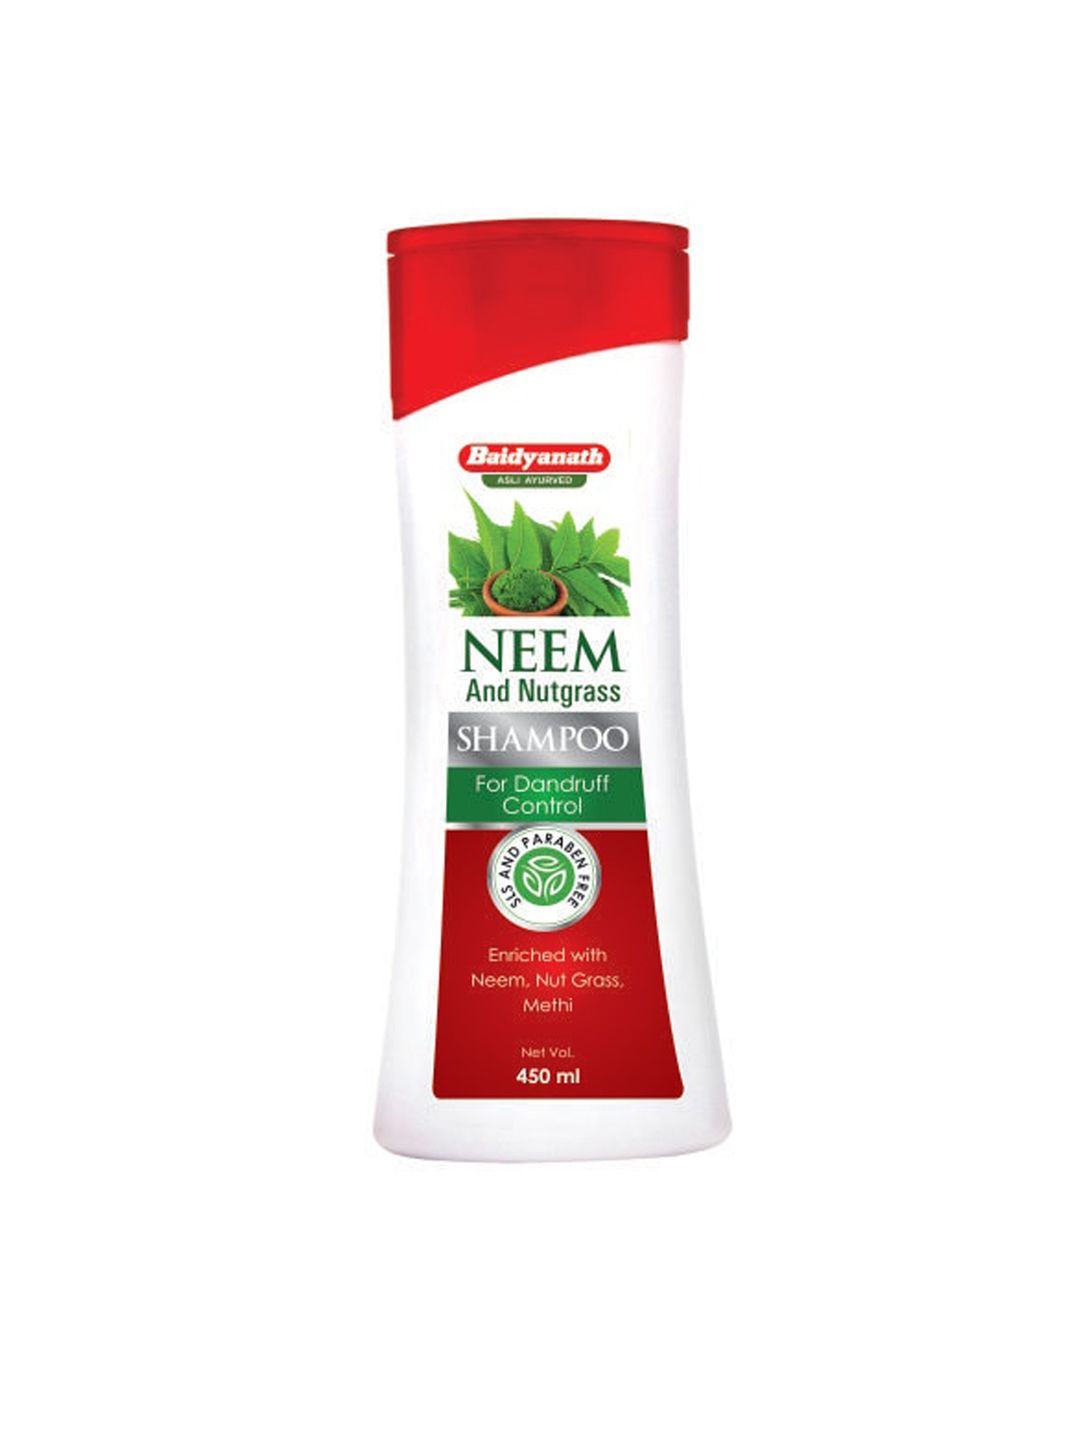 Baidyanath Neem & Nutgrass Dandruff Control Shampoo - 450 ml Price in India